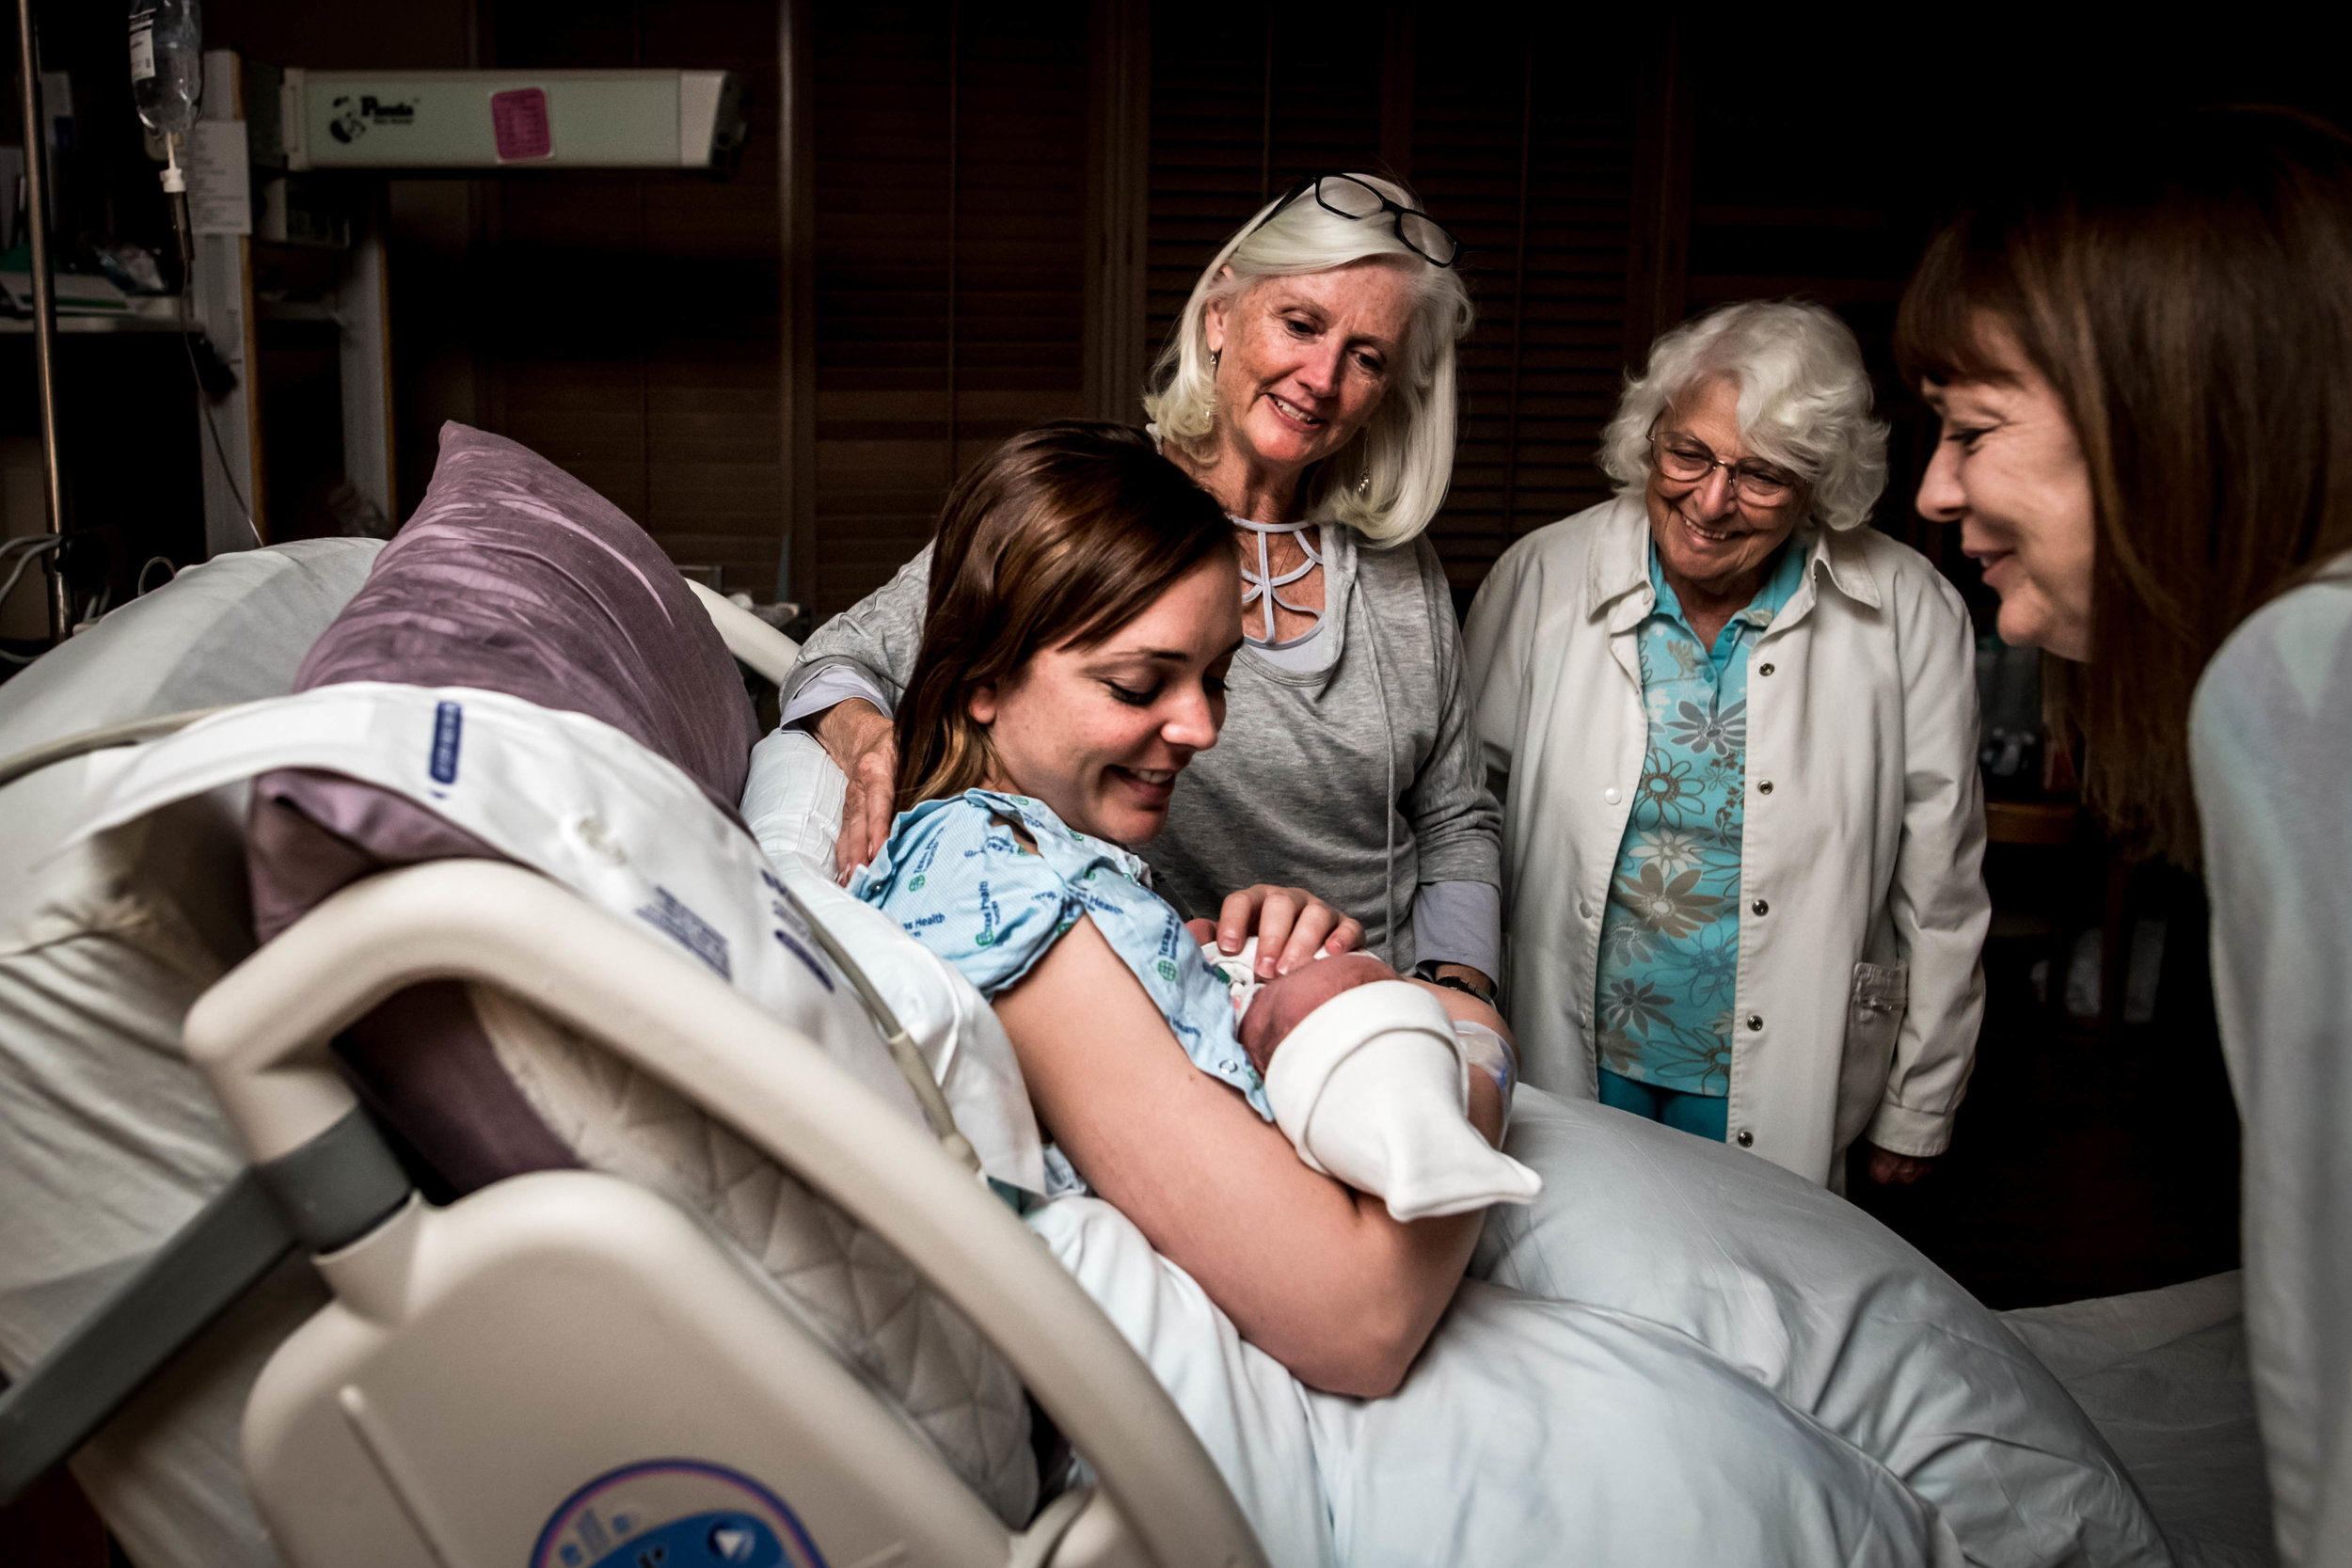 generations gather around to see newborn